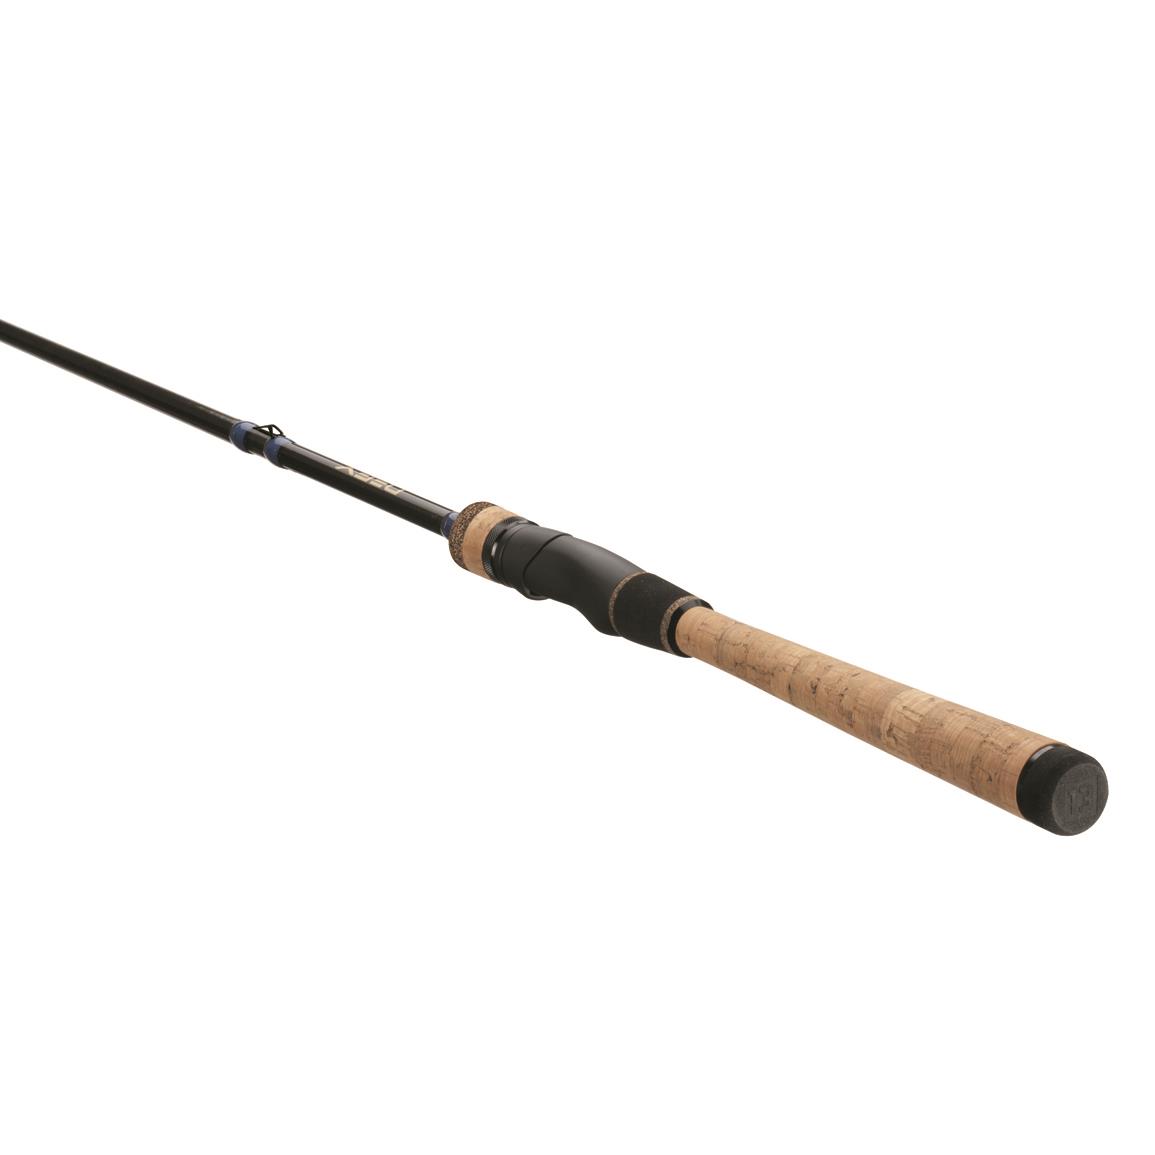 Shimano Scimitar Salmon/Steelhead Spinning Rod, 9' Length, Medium, Moderate  Fast - 730487, Spinning Rods at Sportsman's Guide